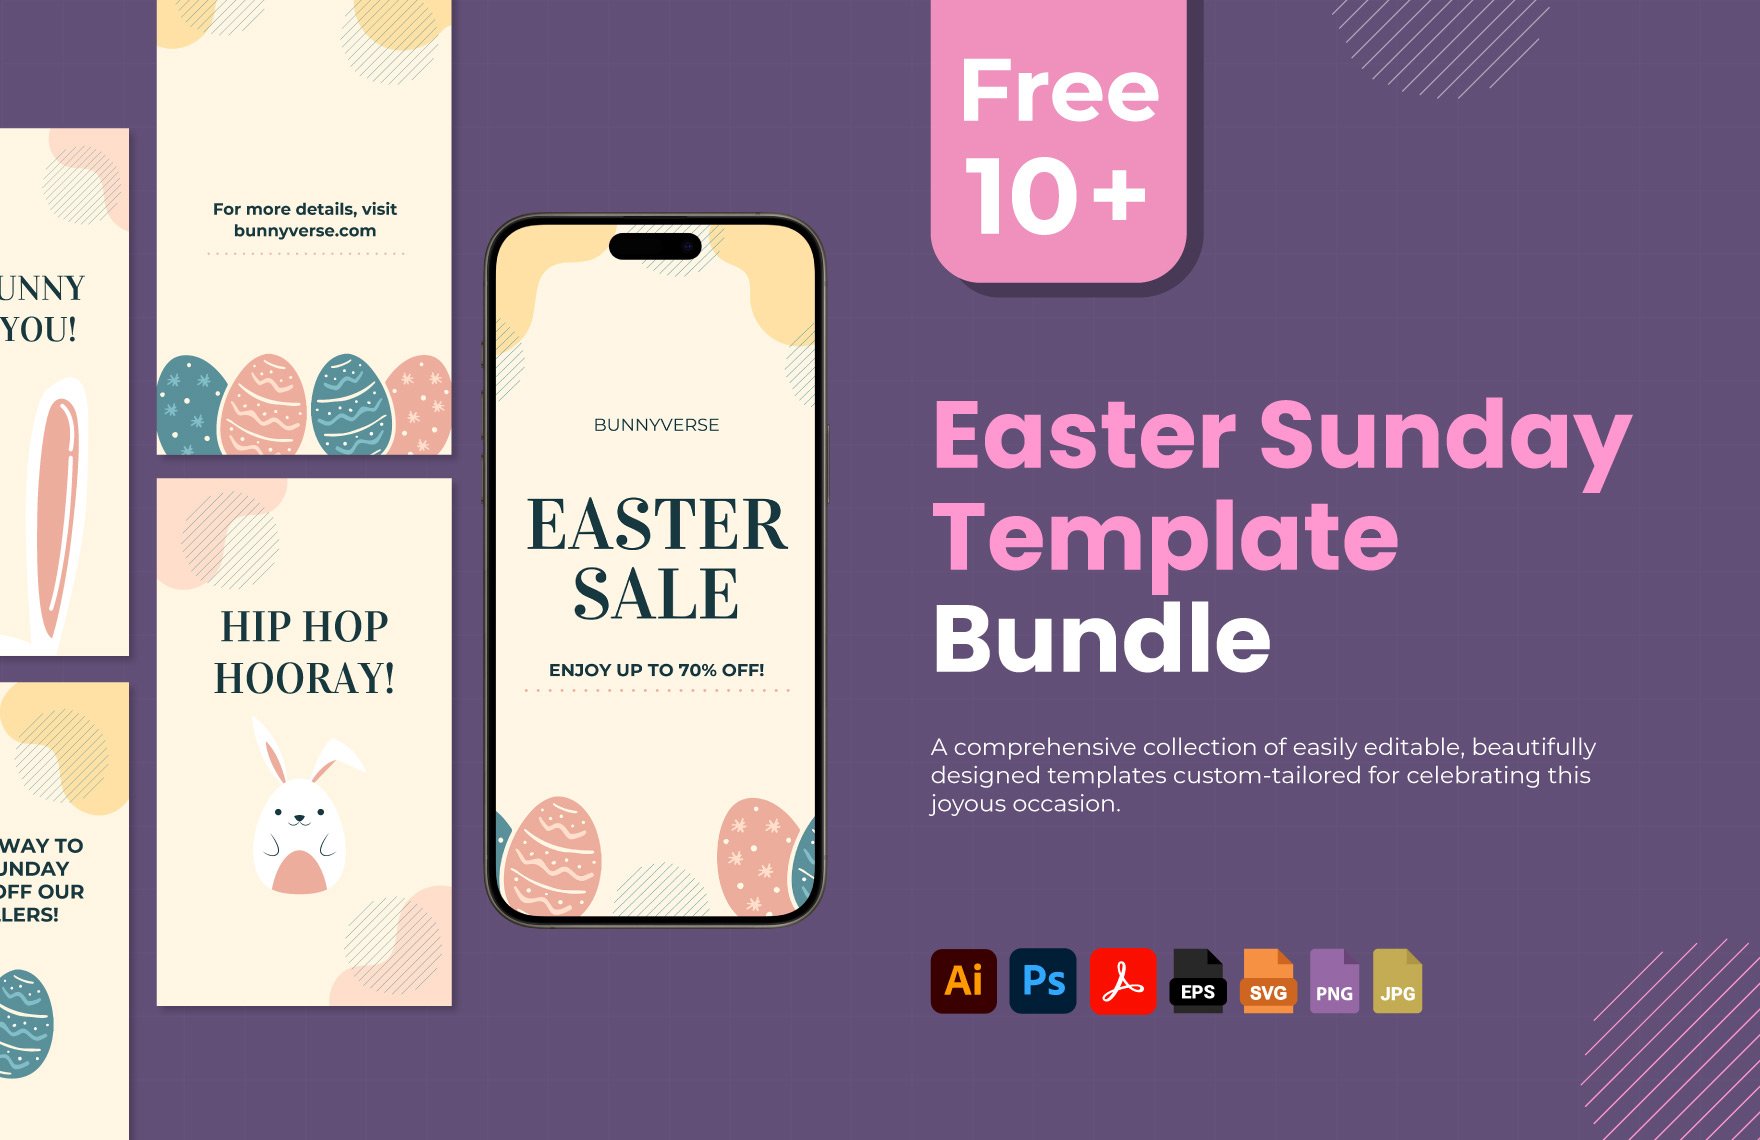 10+ Easter Sunday Template Bundle